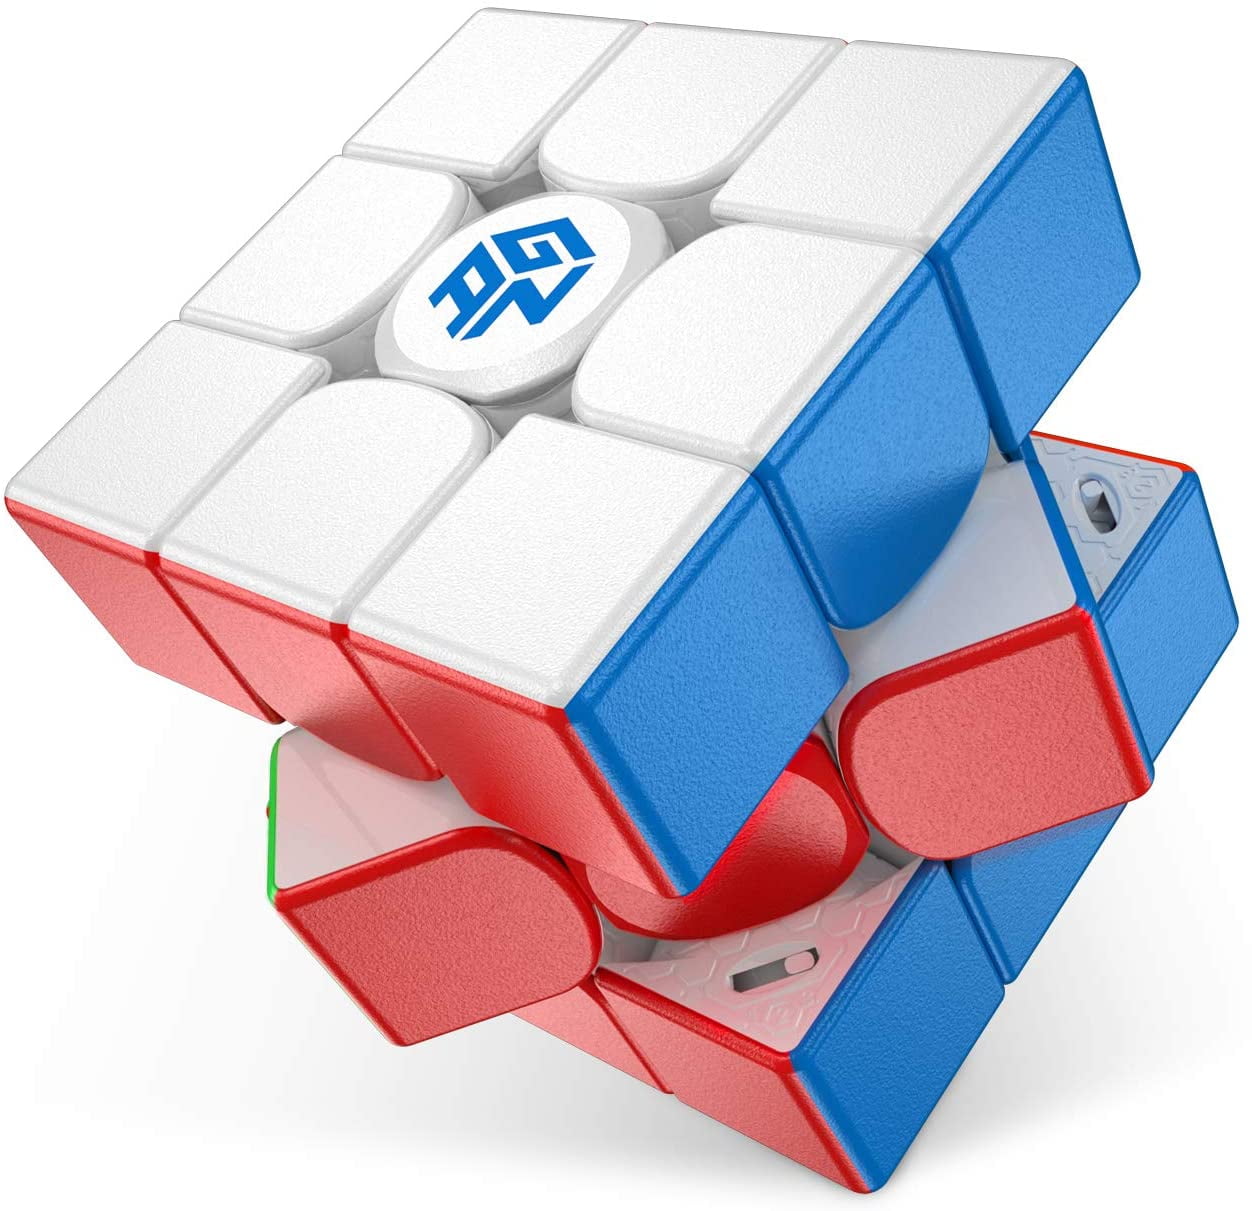 Gan 356 Air M 3x3x3 Version 2020 Magnetic Stickerless Speed Cube USA Stock 